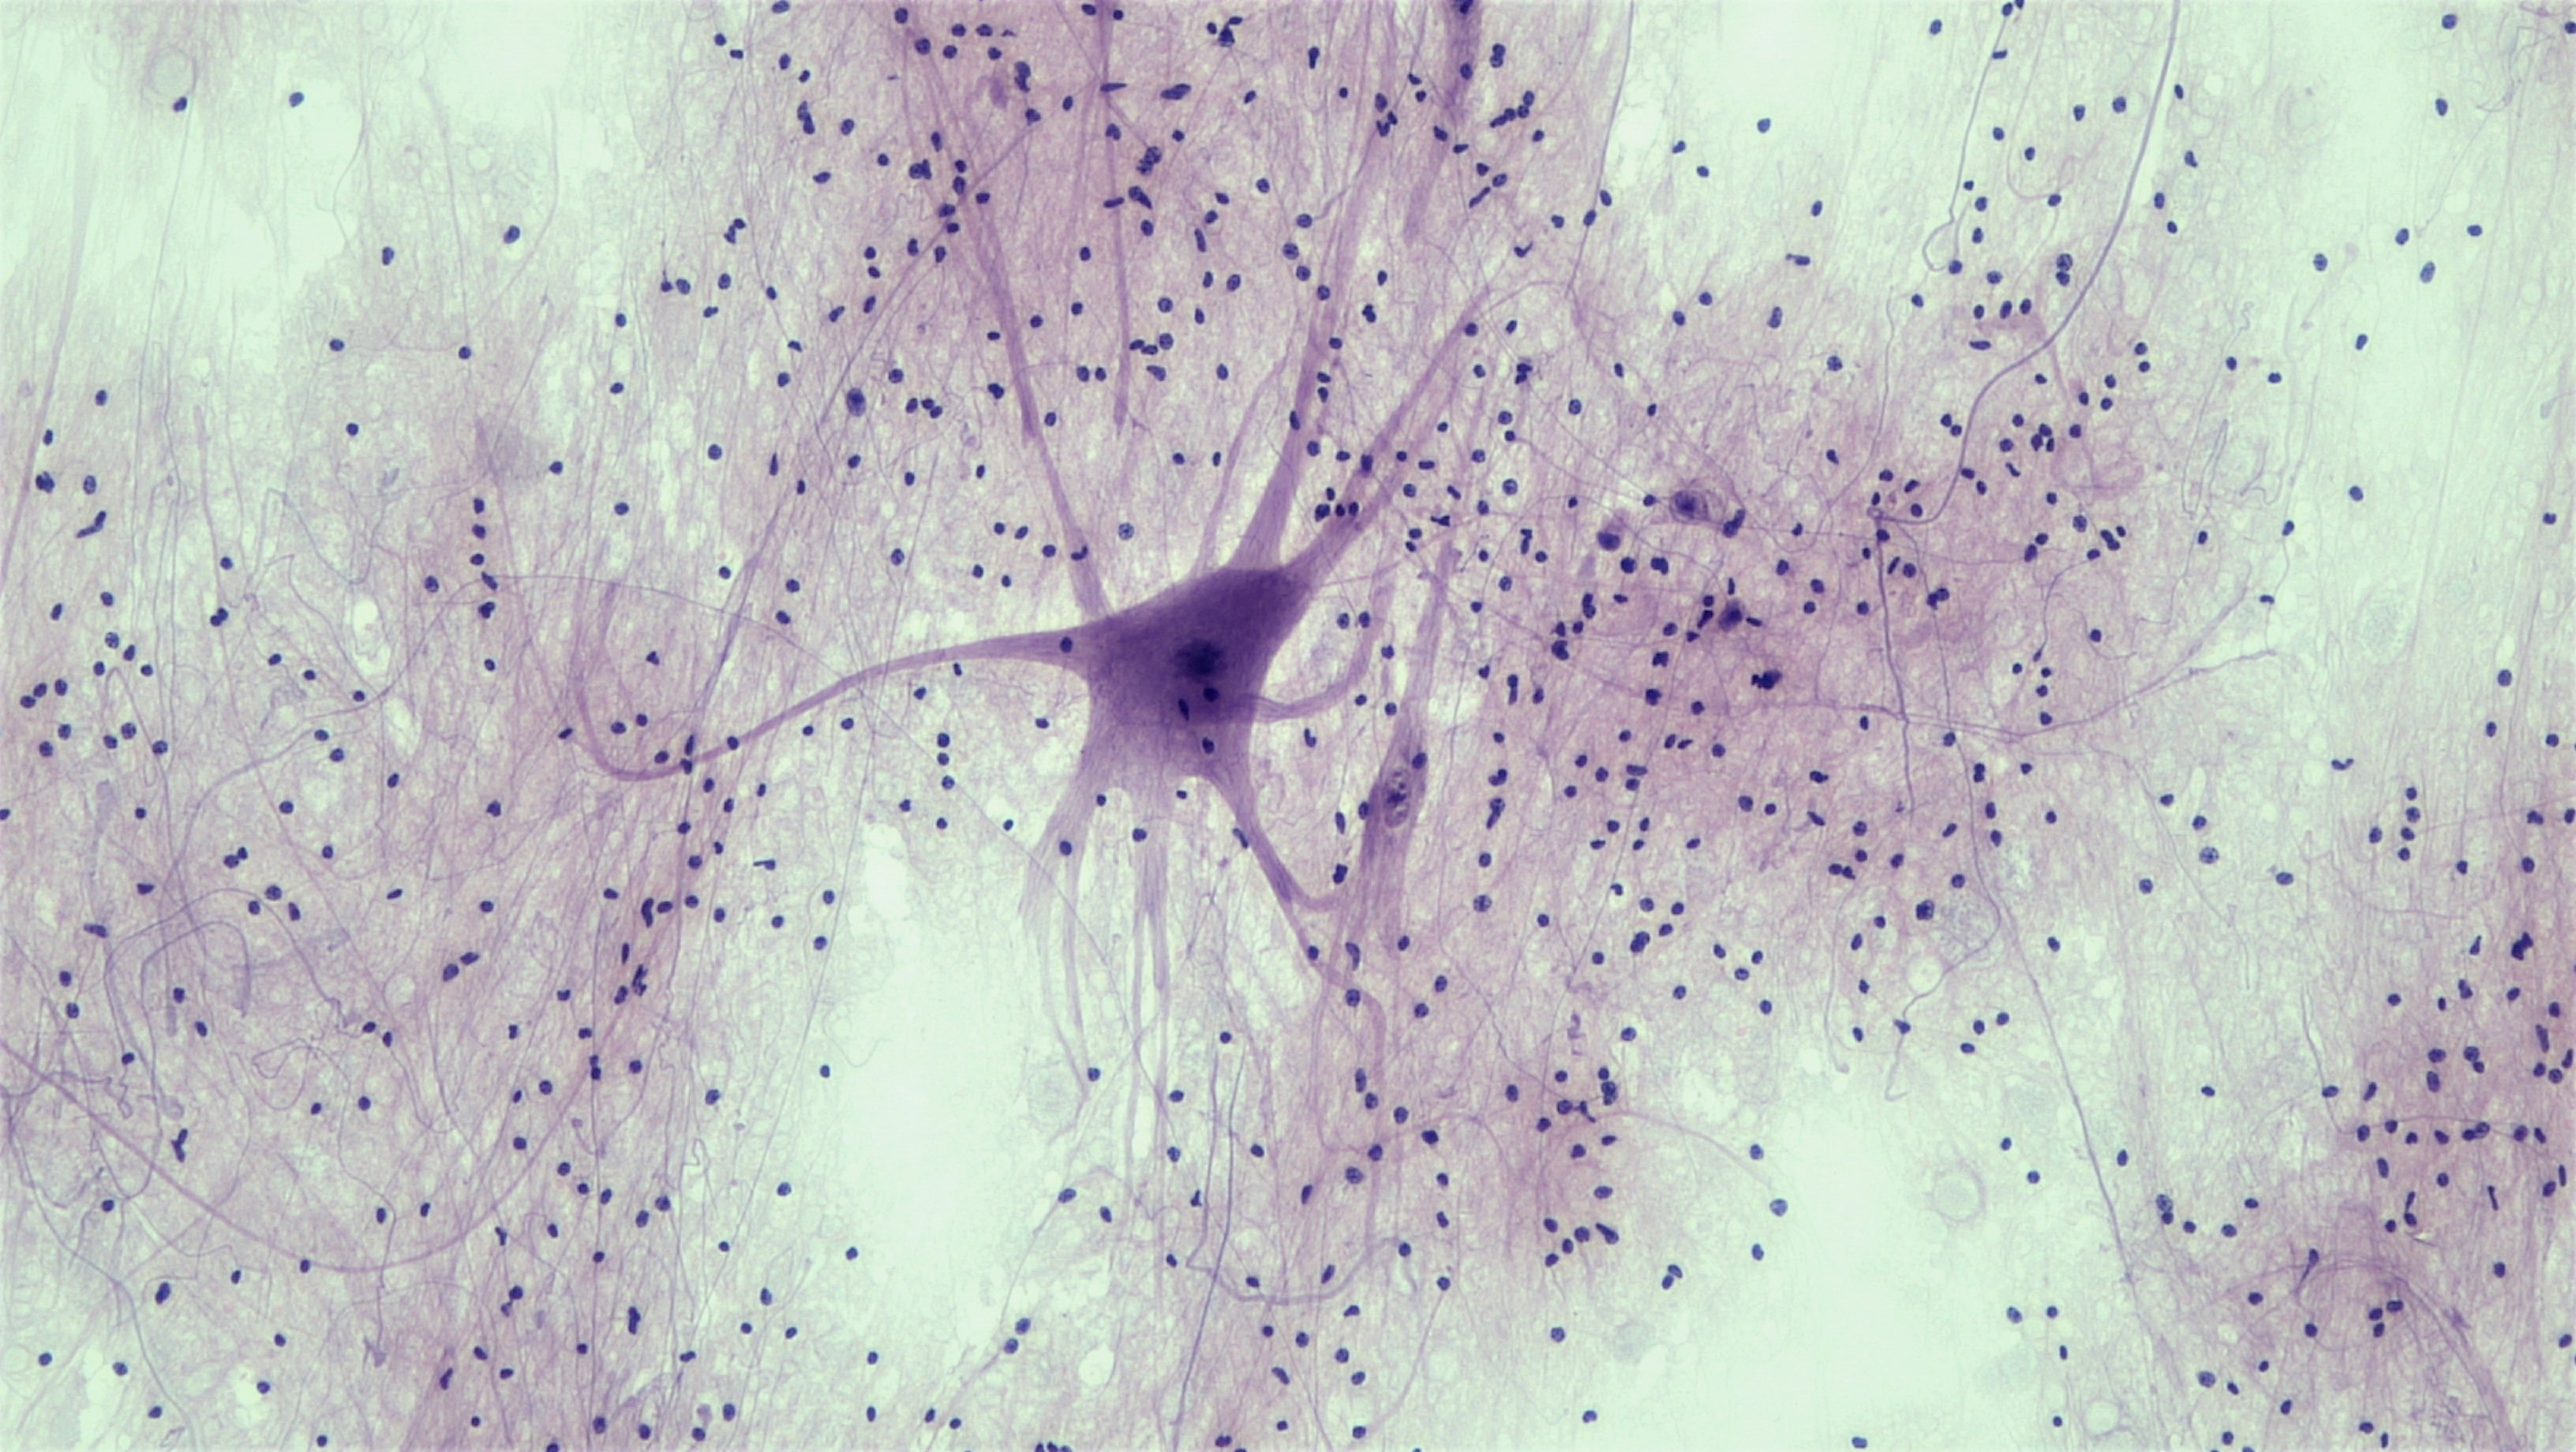 Microscopic image of nervous tissue